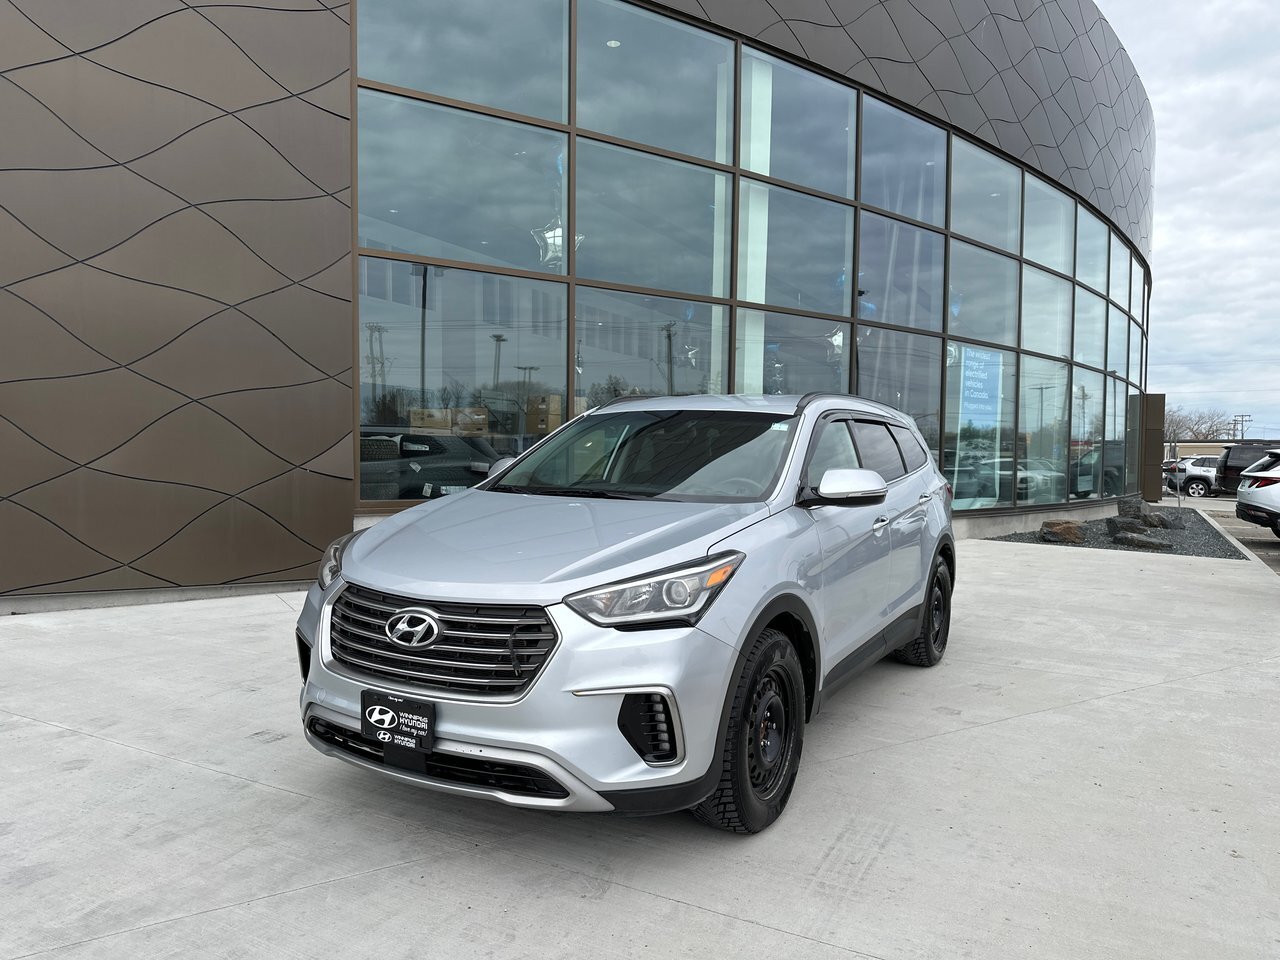 2019 Hyundai Santa Fe XL Preferred Push start, heated wheel/seats & back up